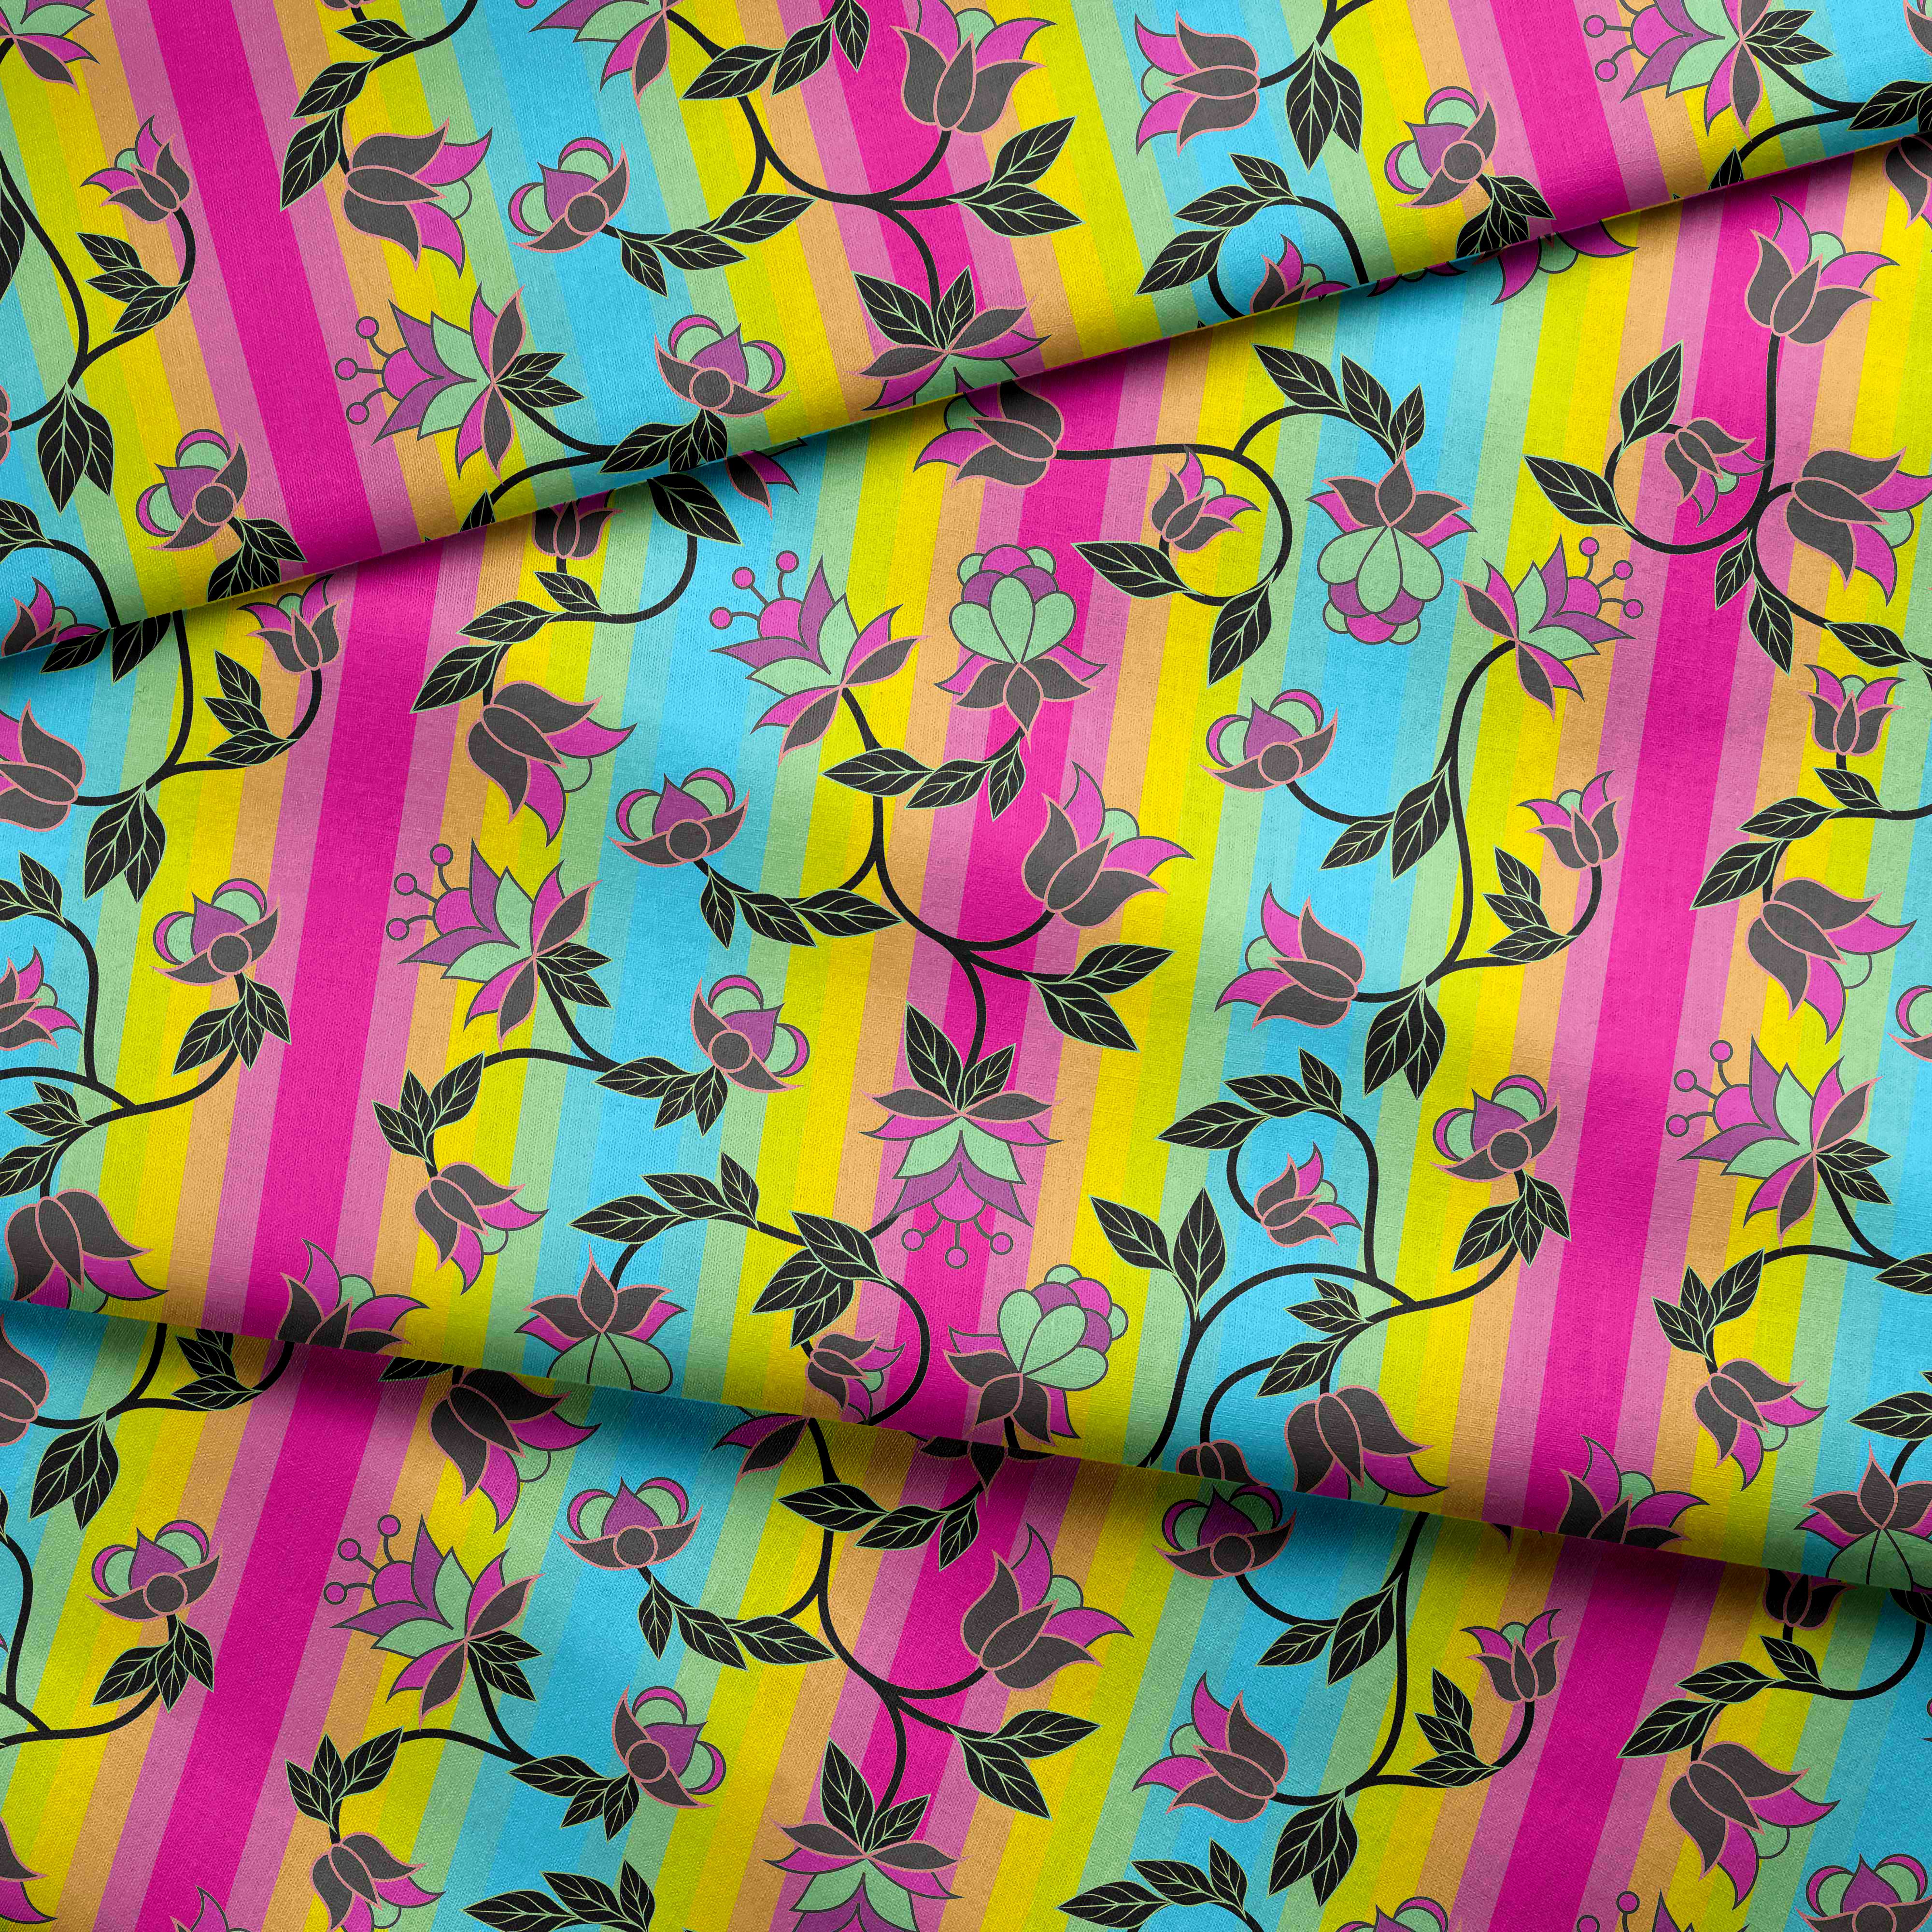 Powwow Carnival Cotton Poplin Fabric By the Yard Fabric NBprintex 